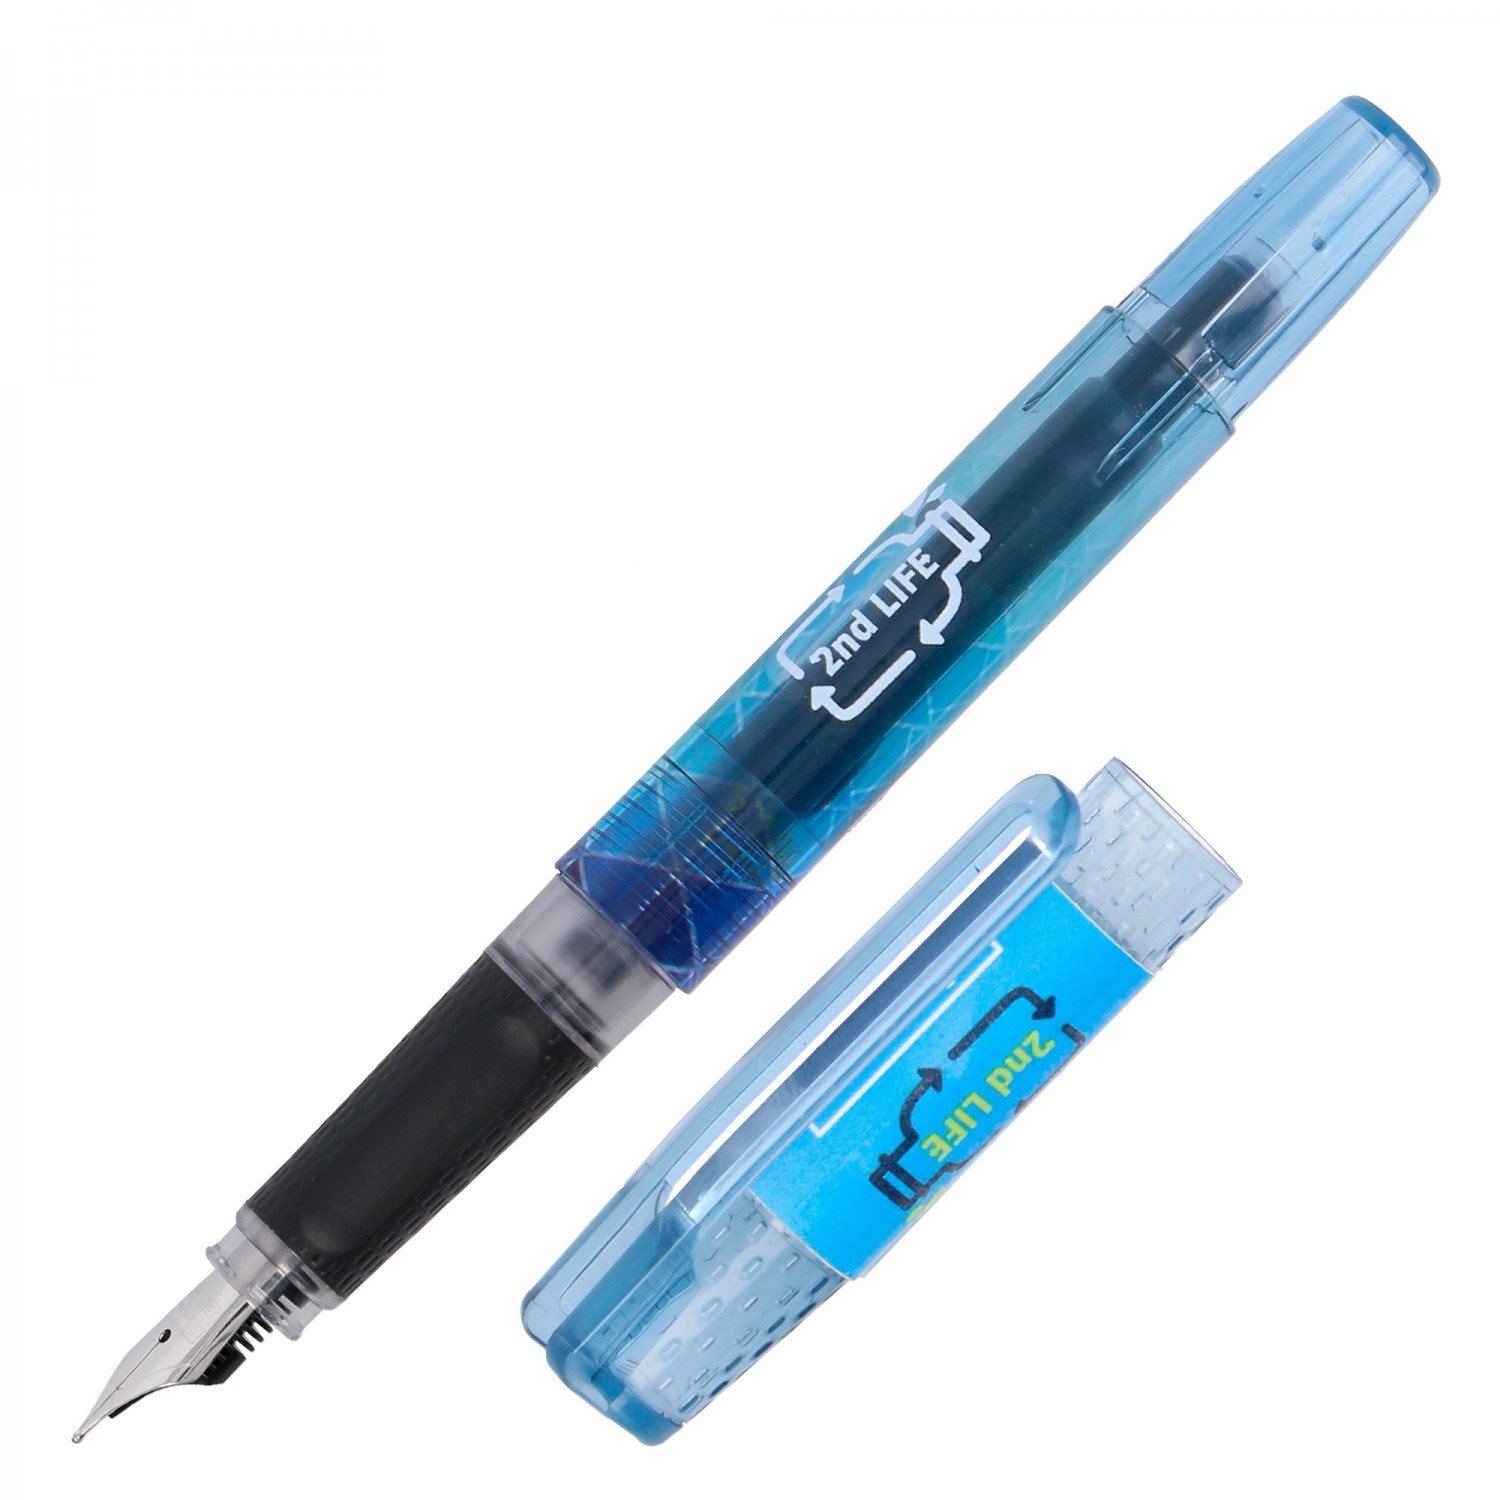 Eco Fountain Pen 2nd LIFE with iridium nib | Online Pen